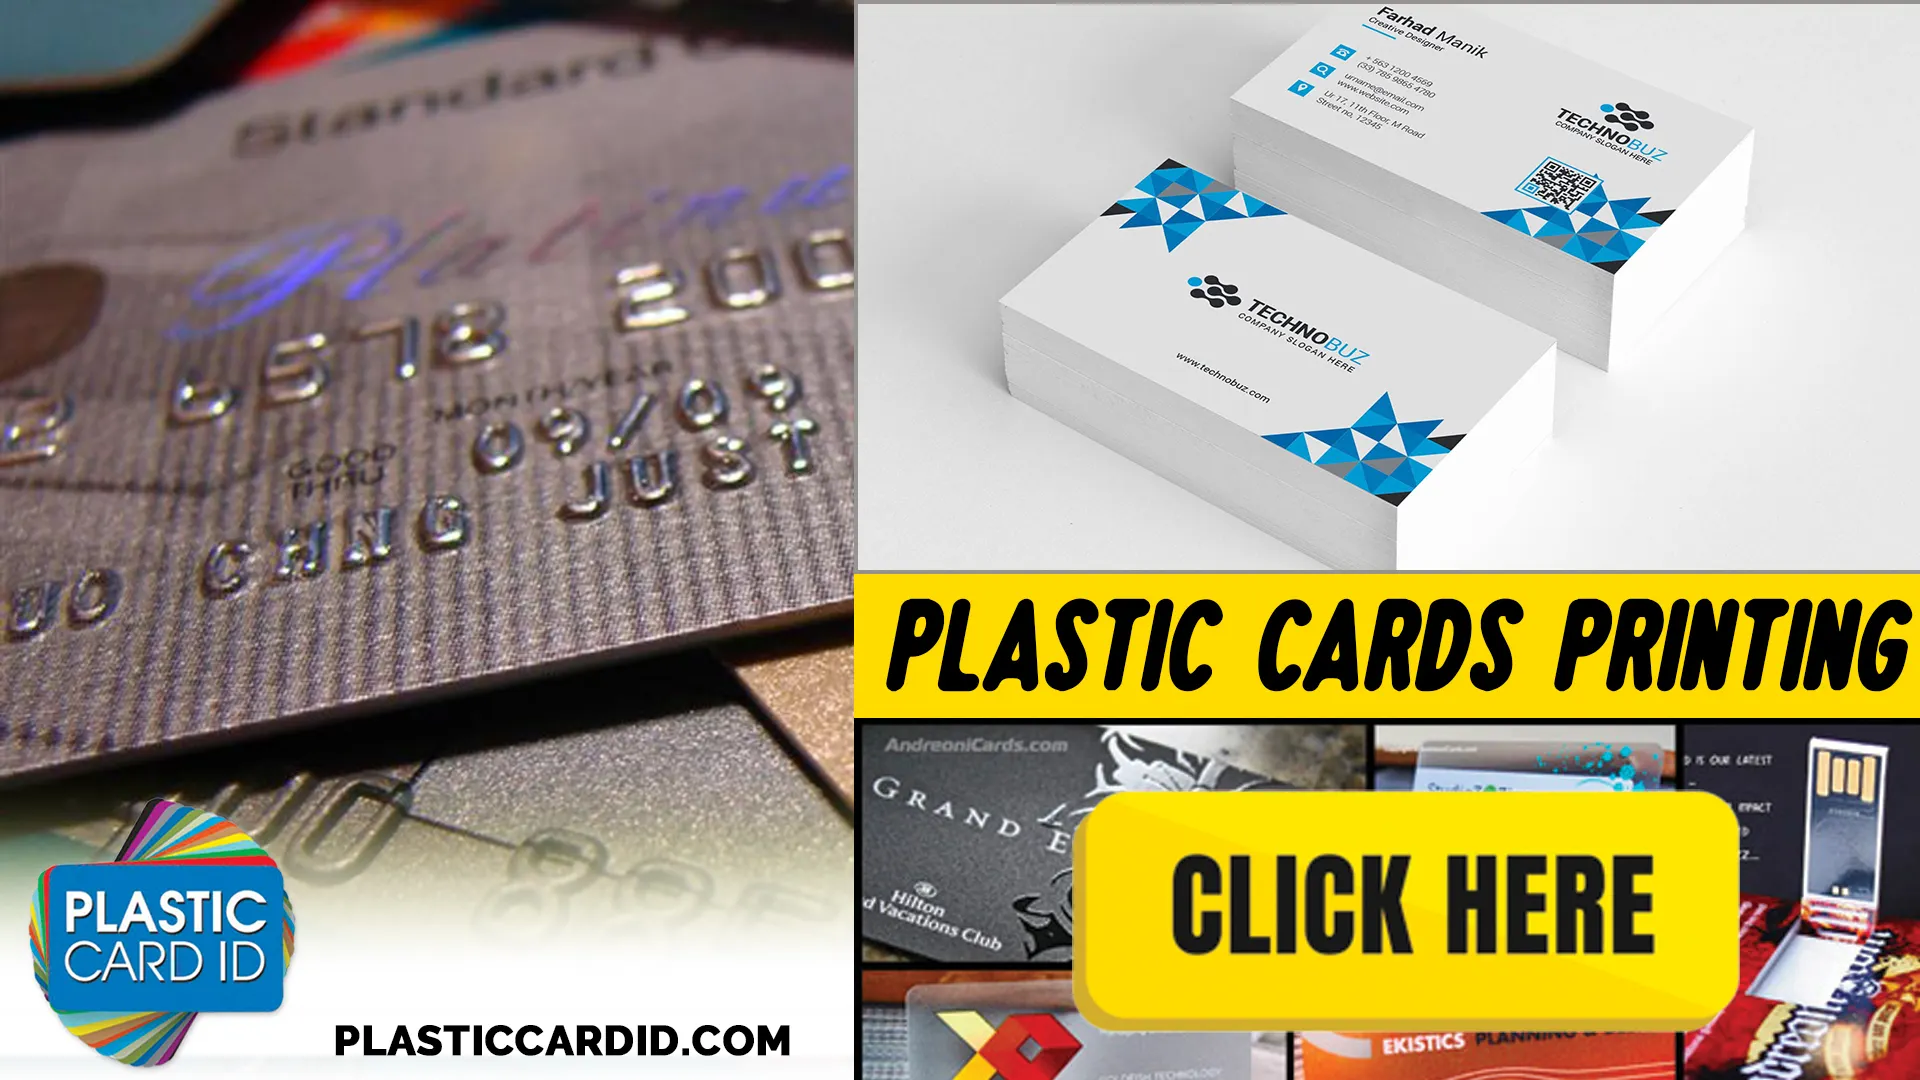 Why Choose Plastic Card ID
?